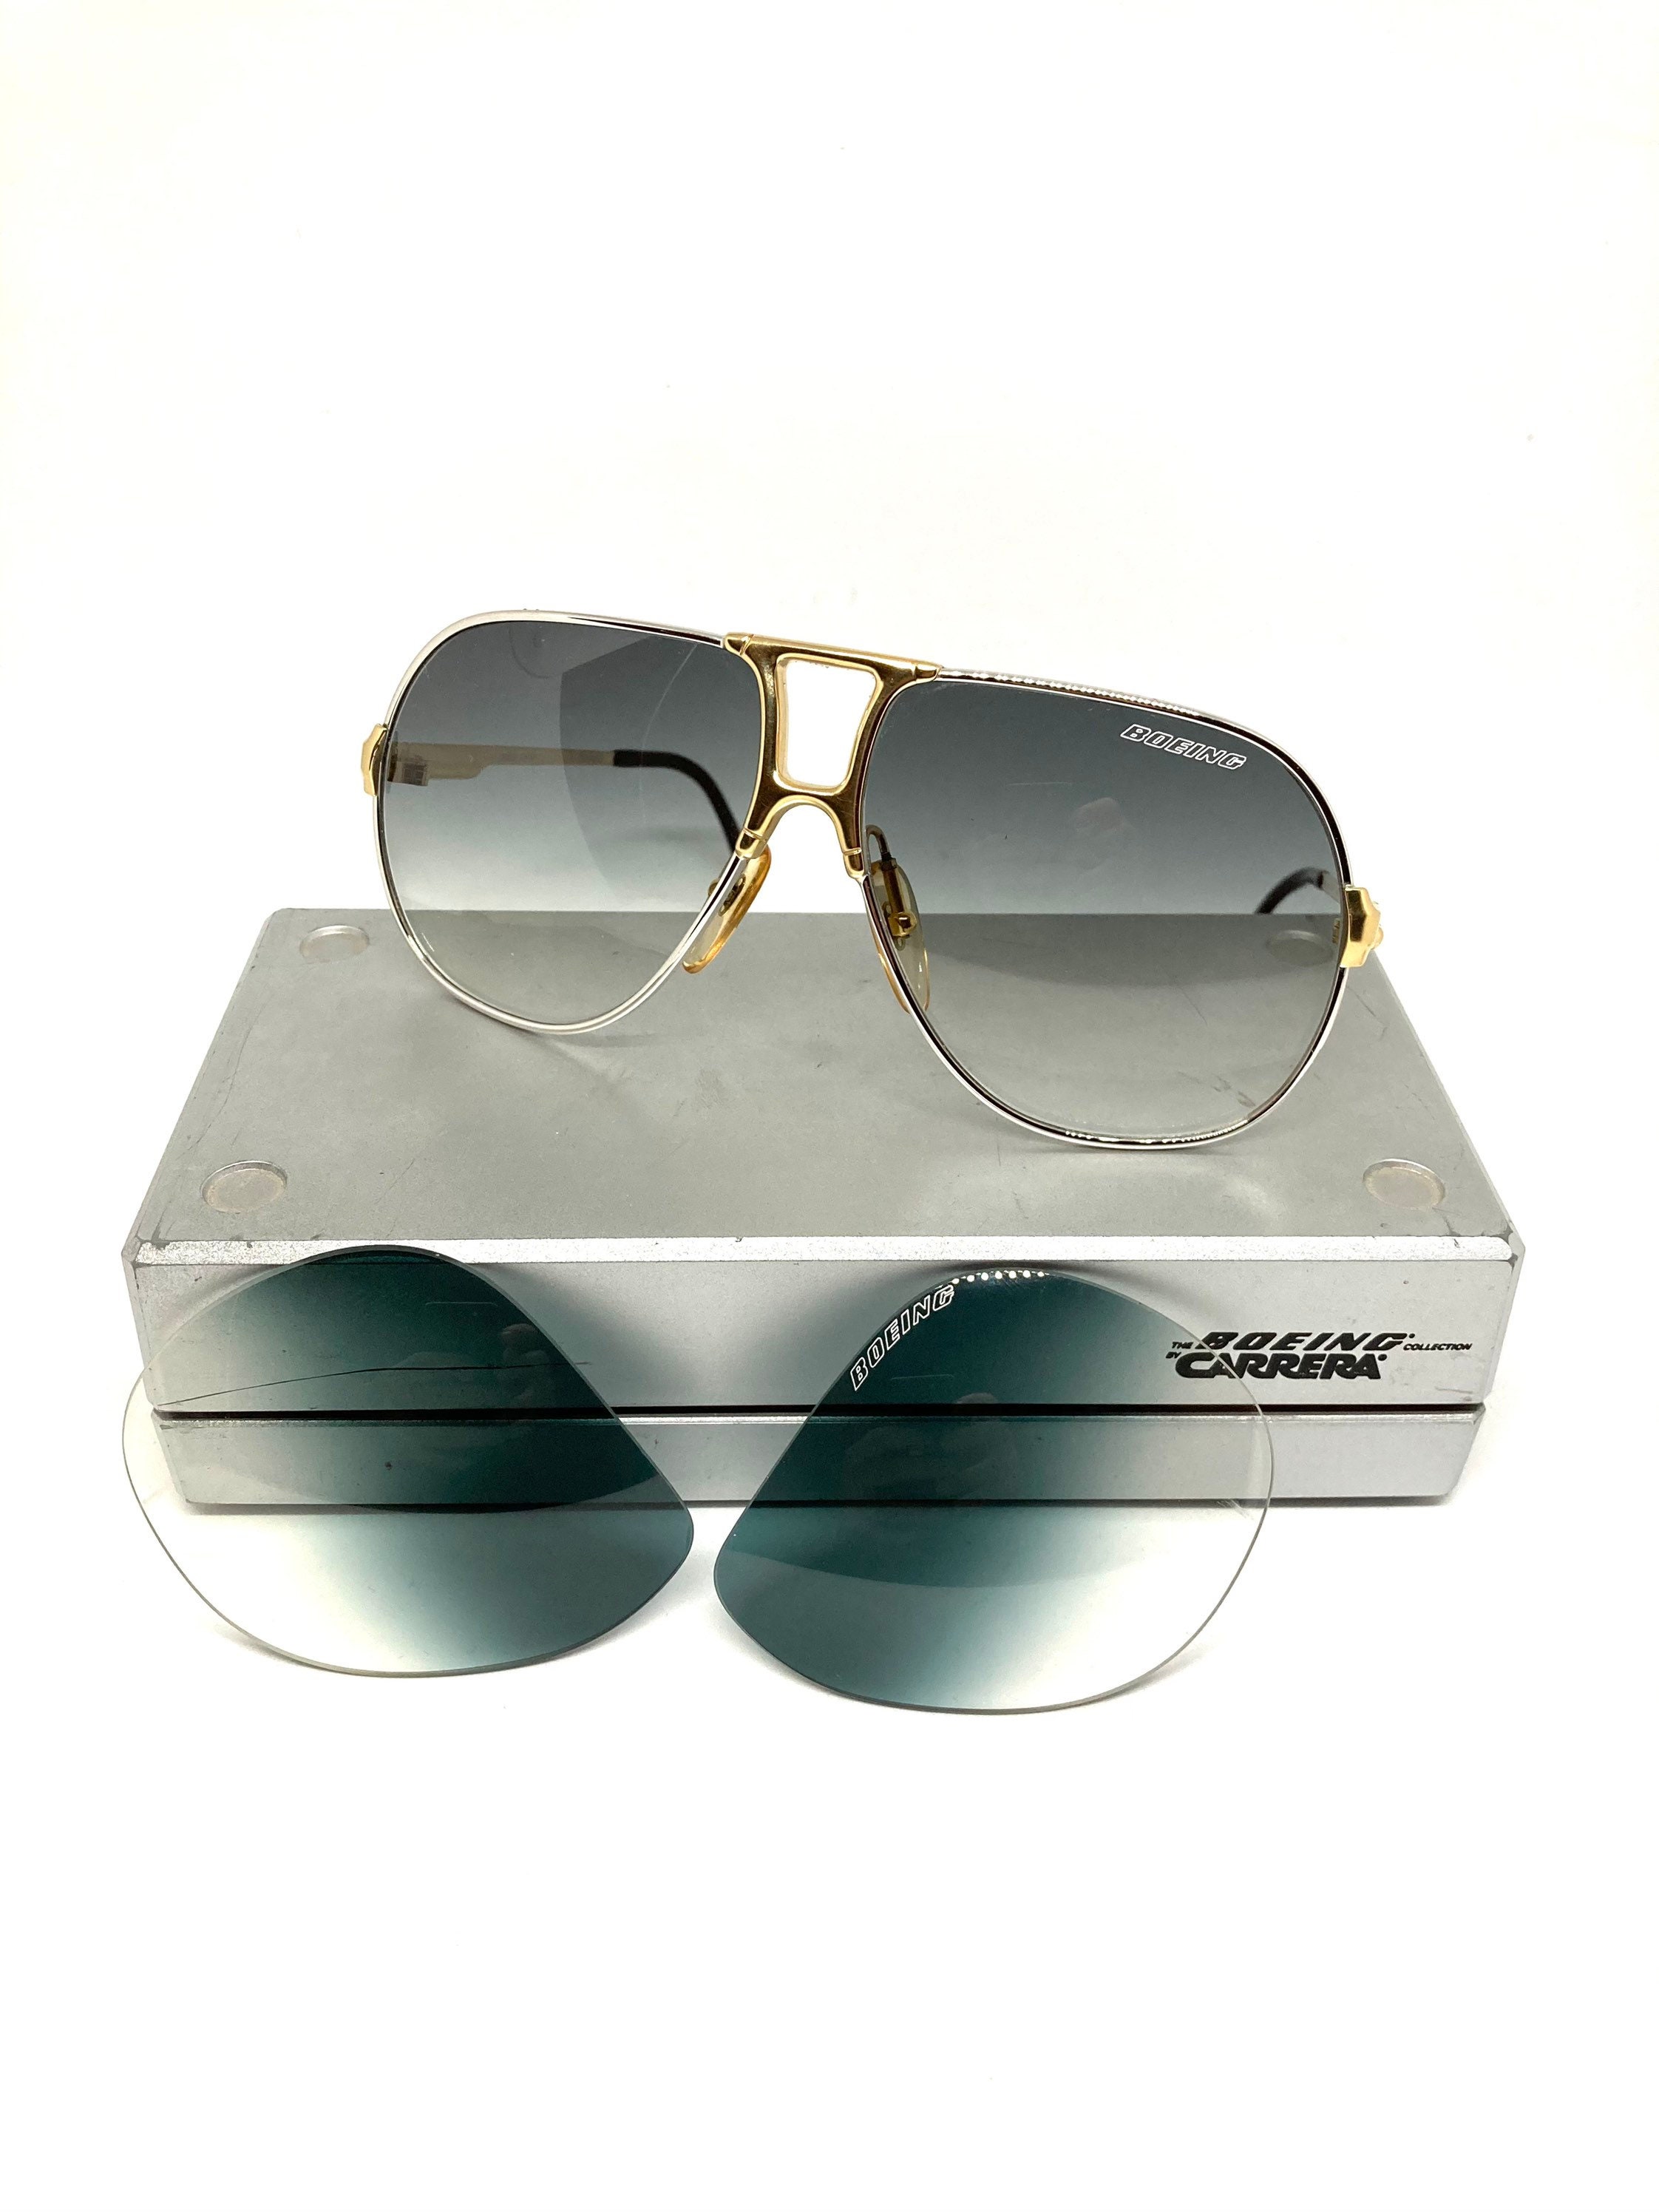 Vintage Carrera Boeing 5700 41 60-12 Small Sunglasses - Etsy Ireland